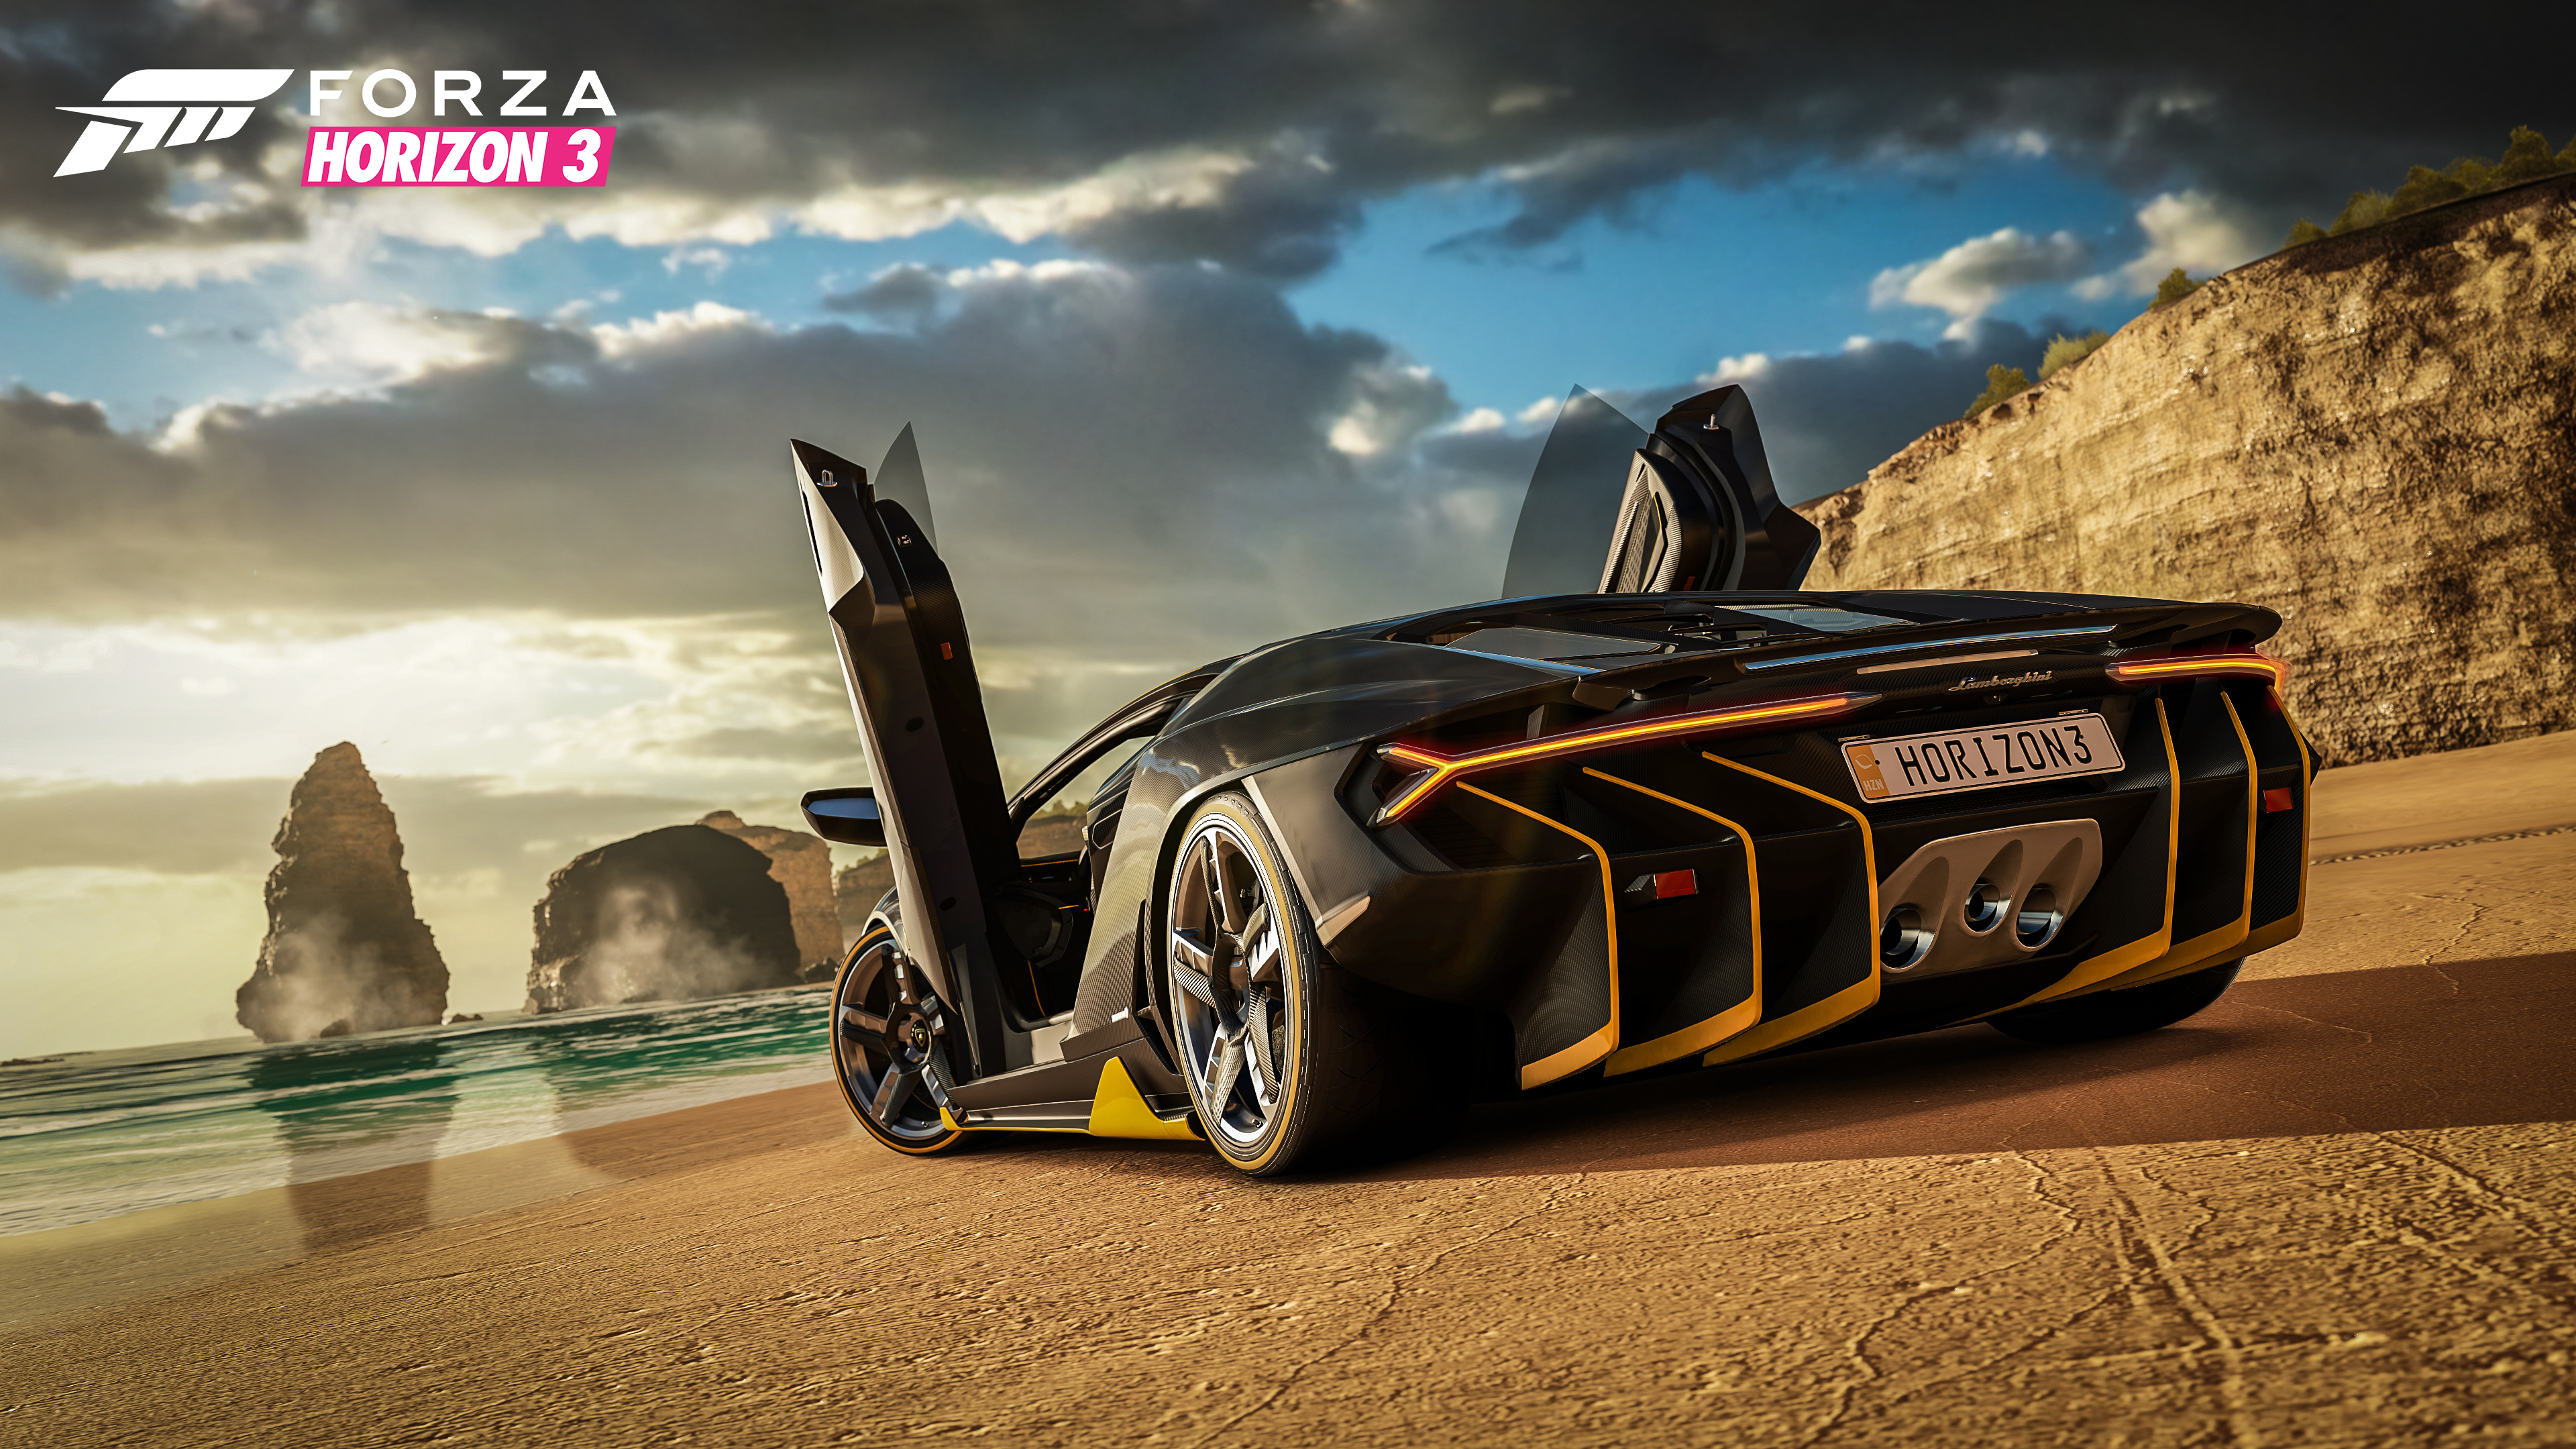 One of the Lamborghinis in Forza Horizon 3